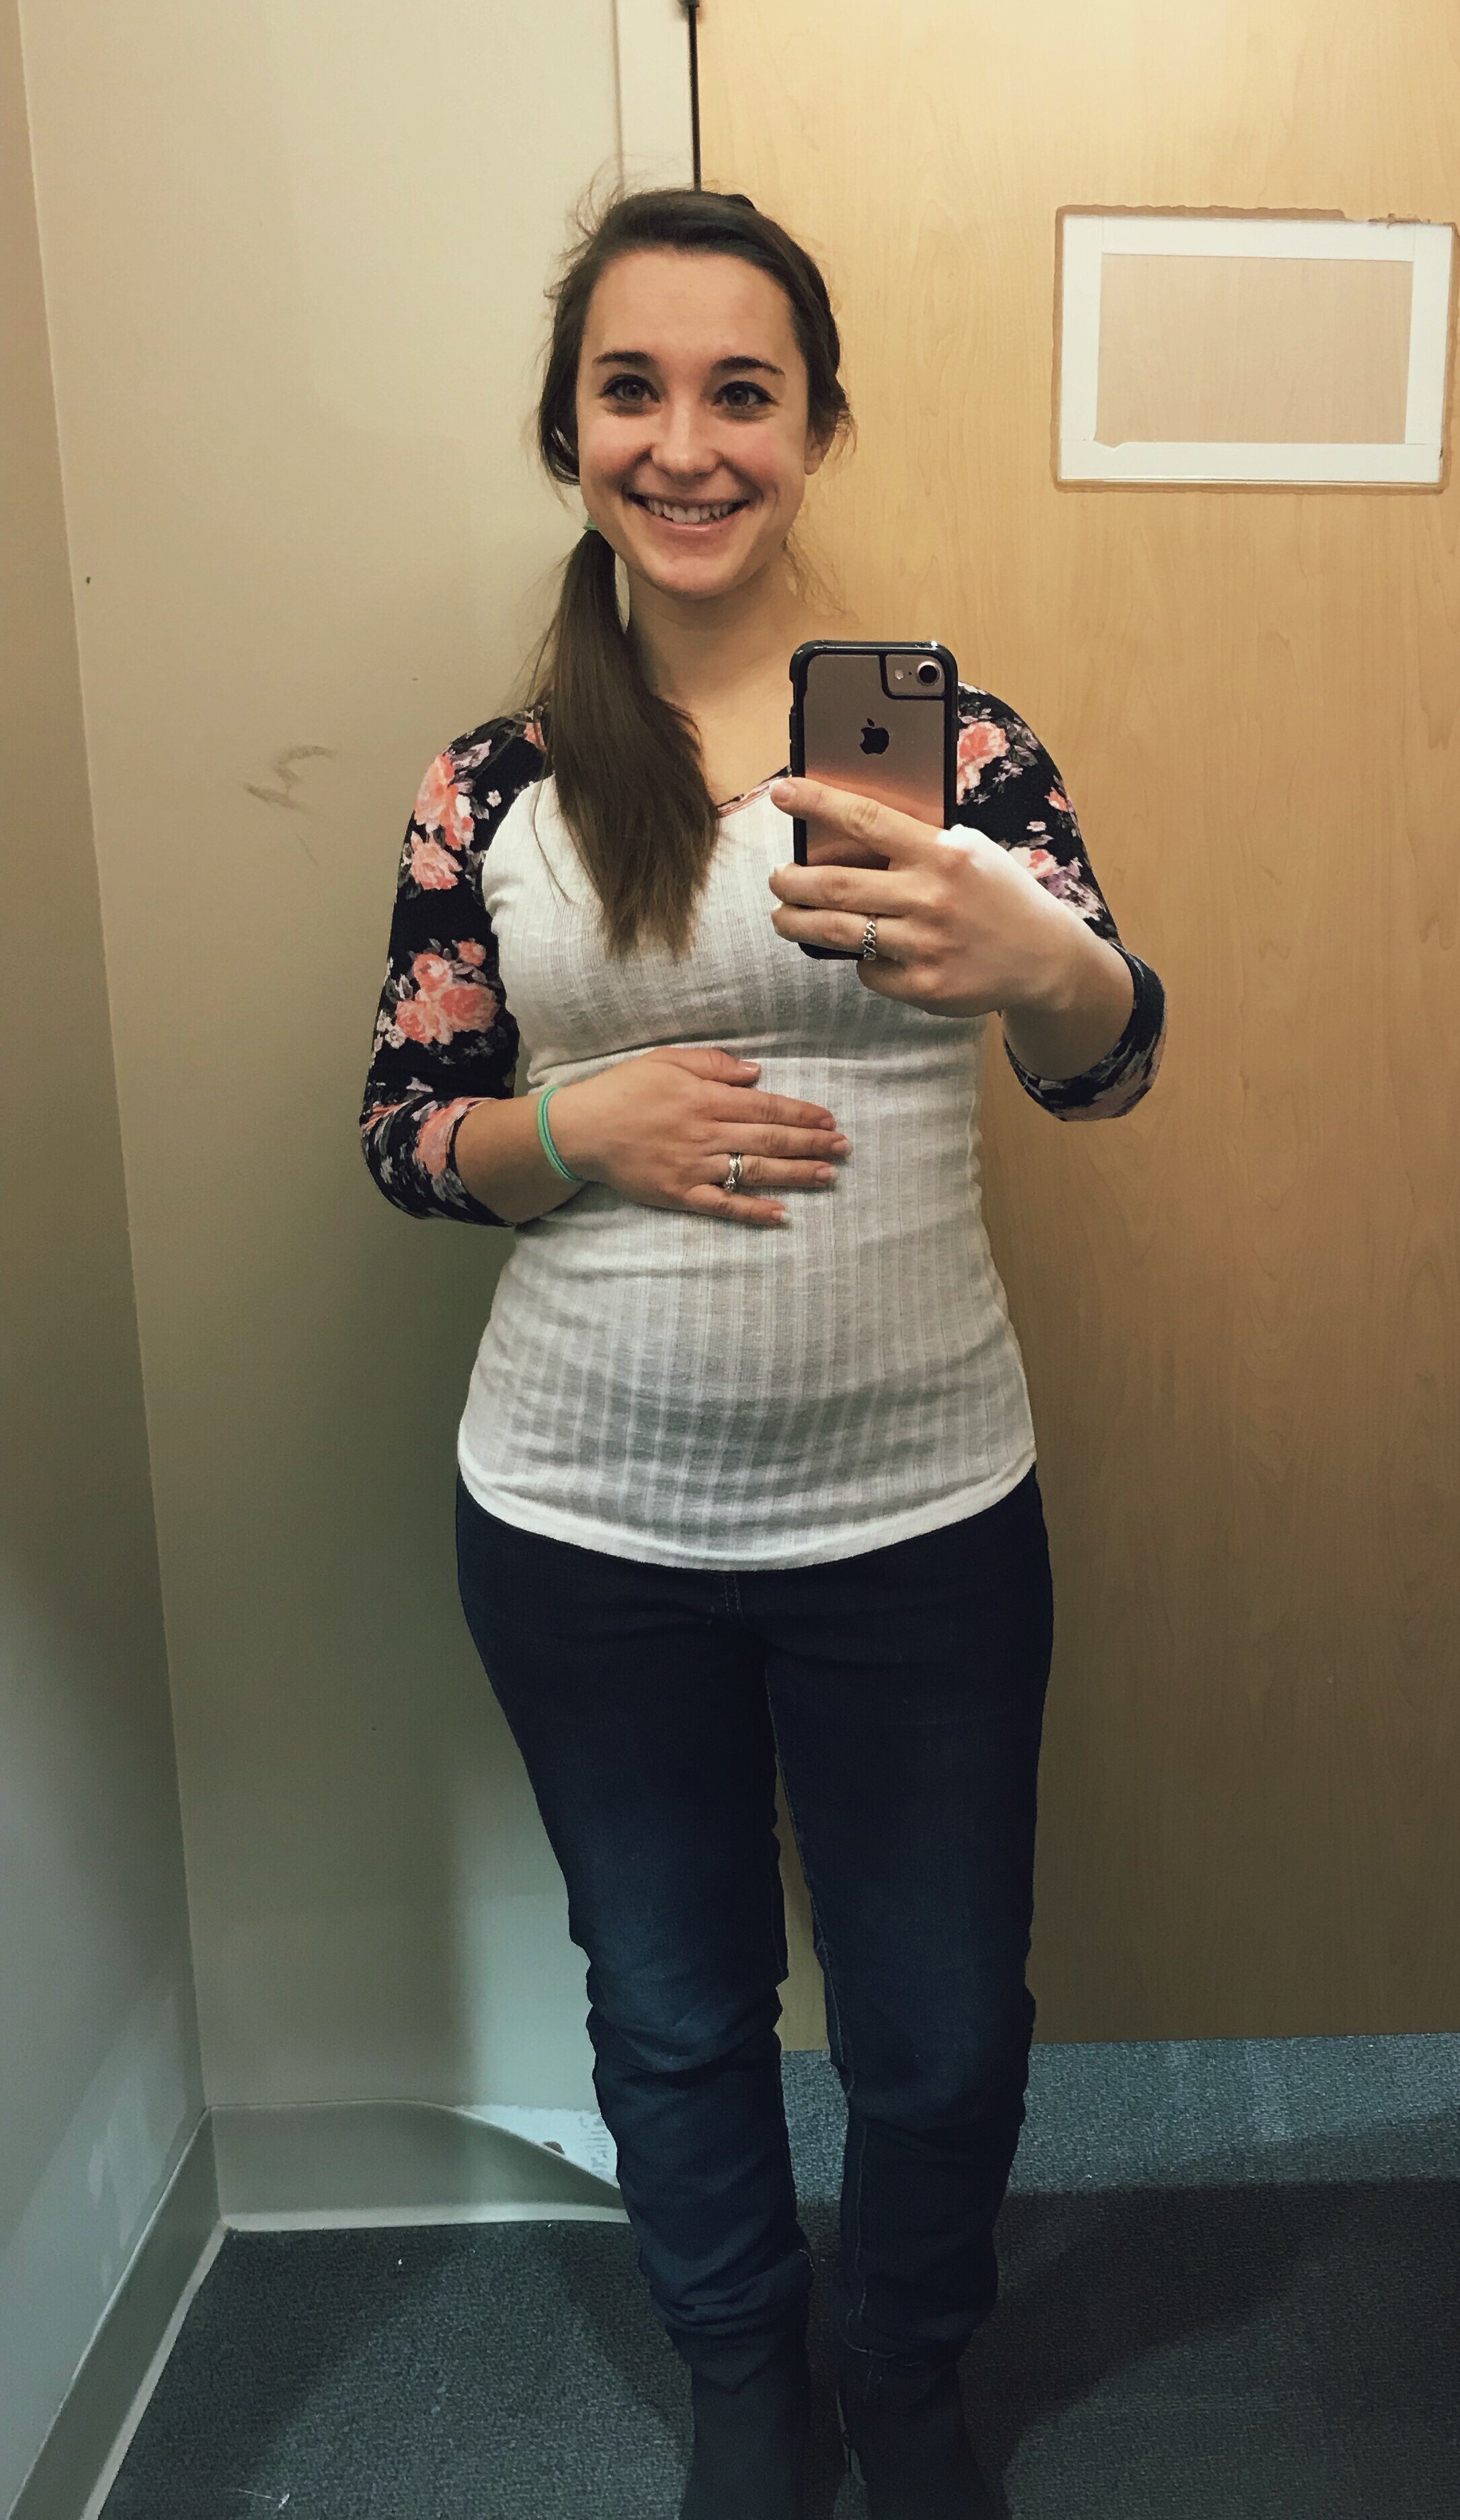 15 Weeks Pregnant Photo